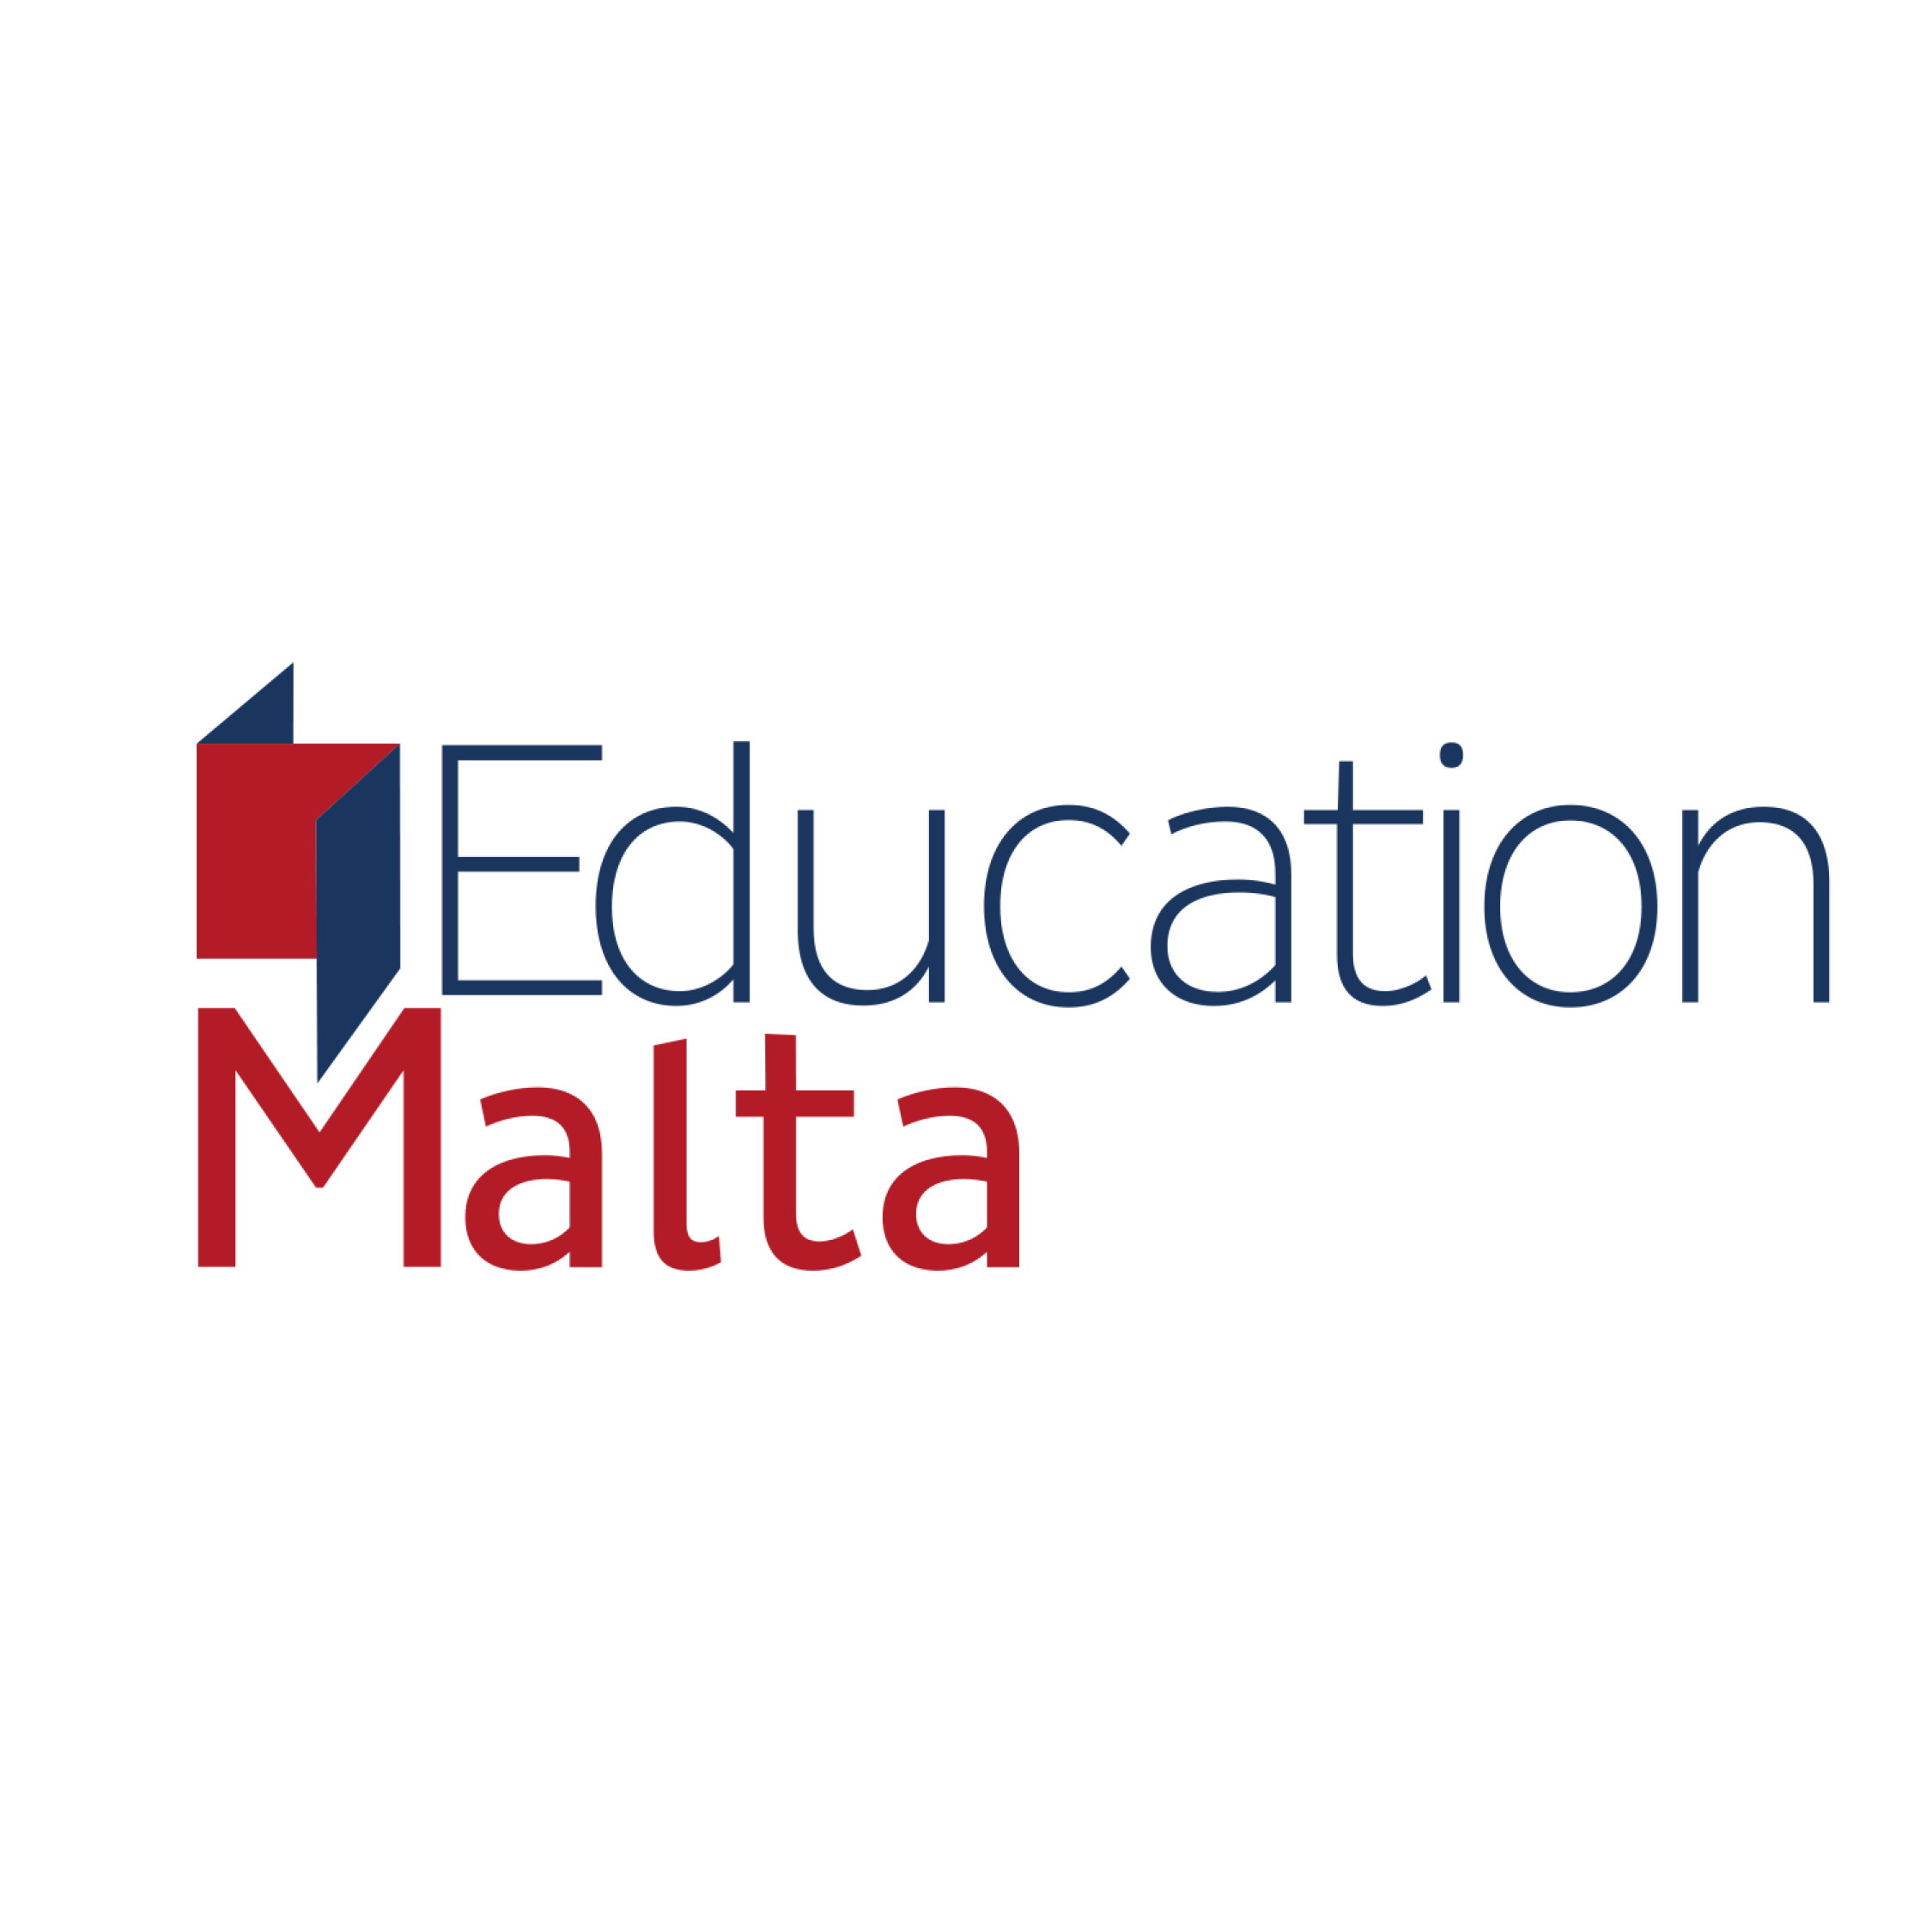 Education-malta.png